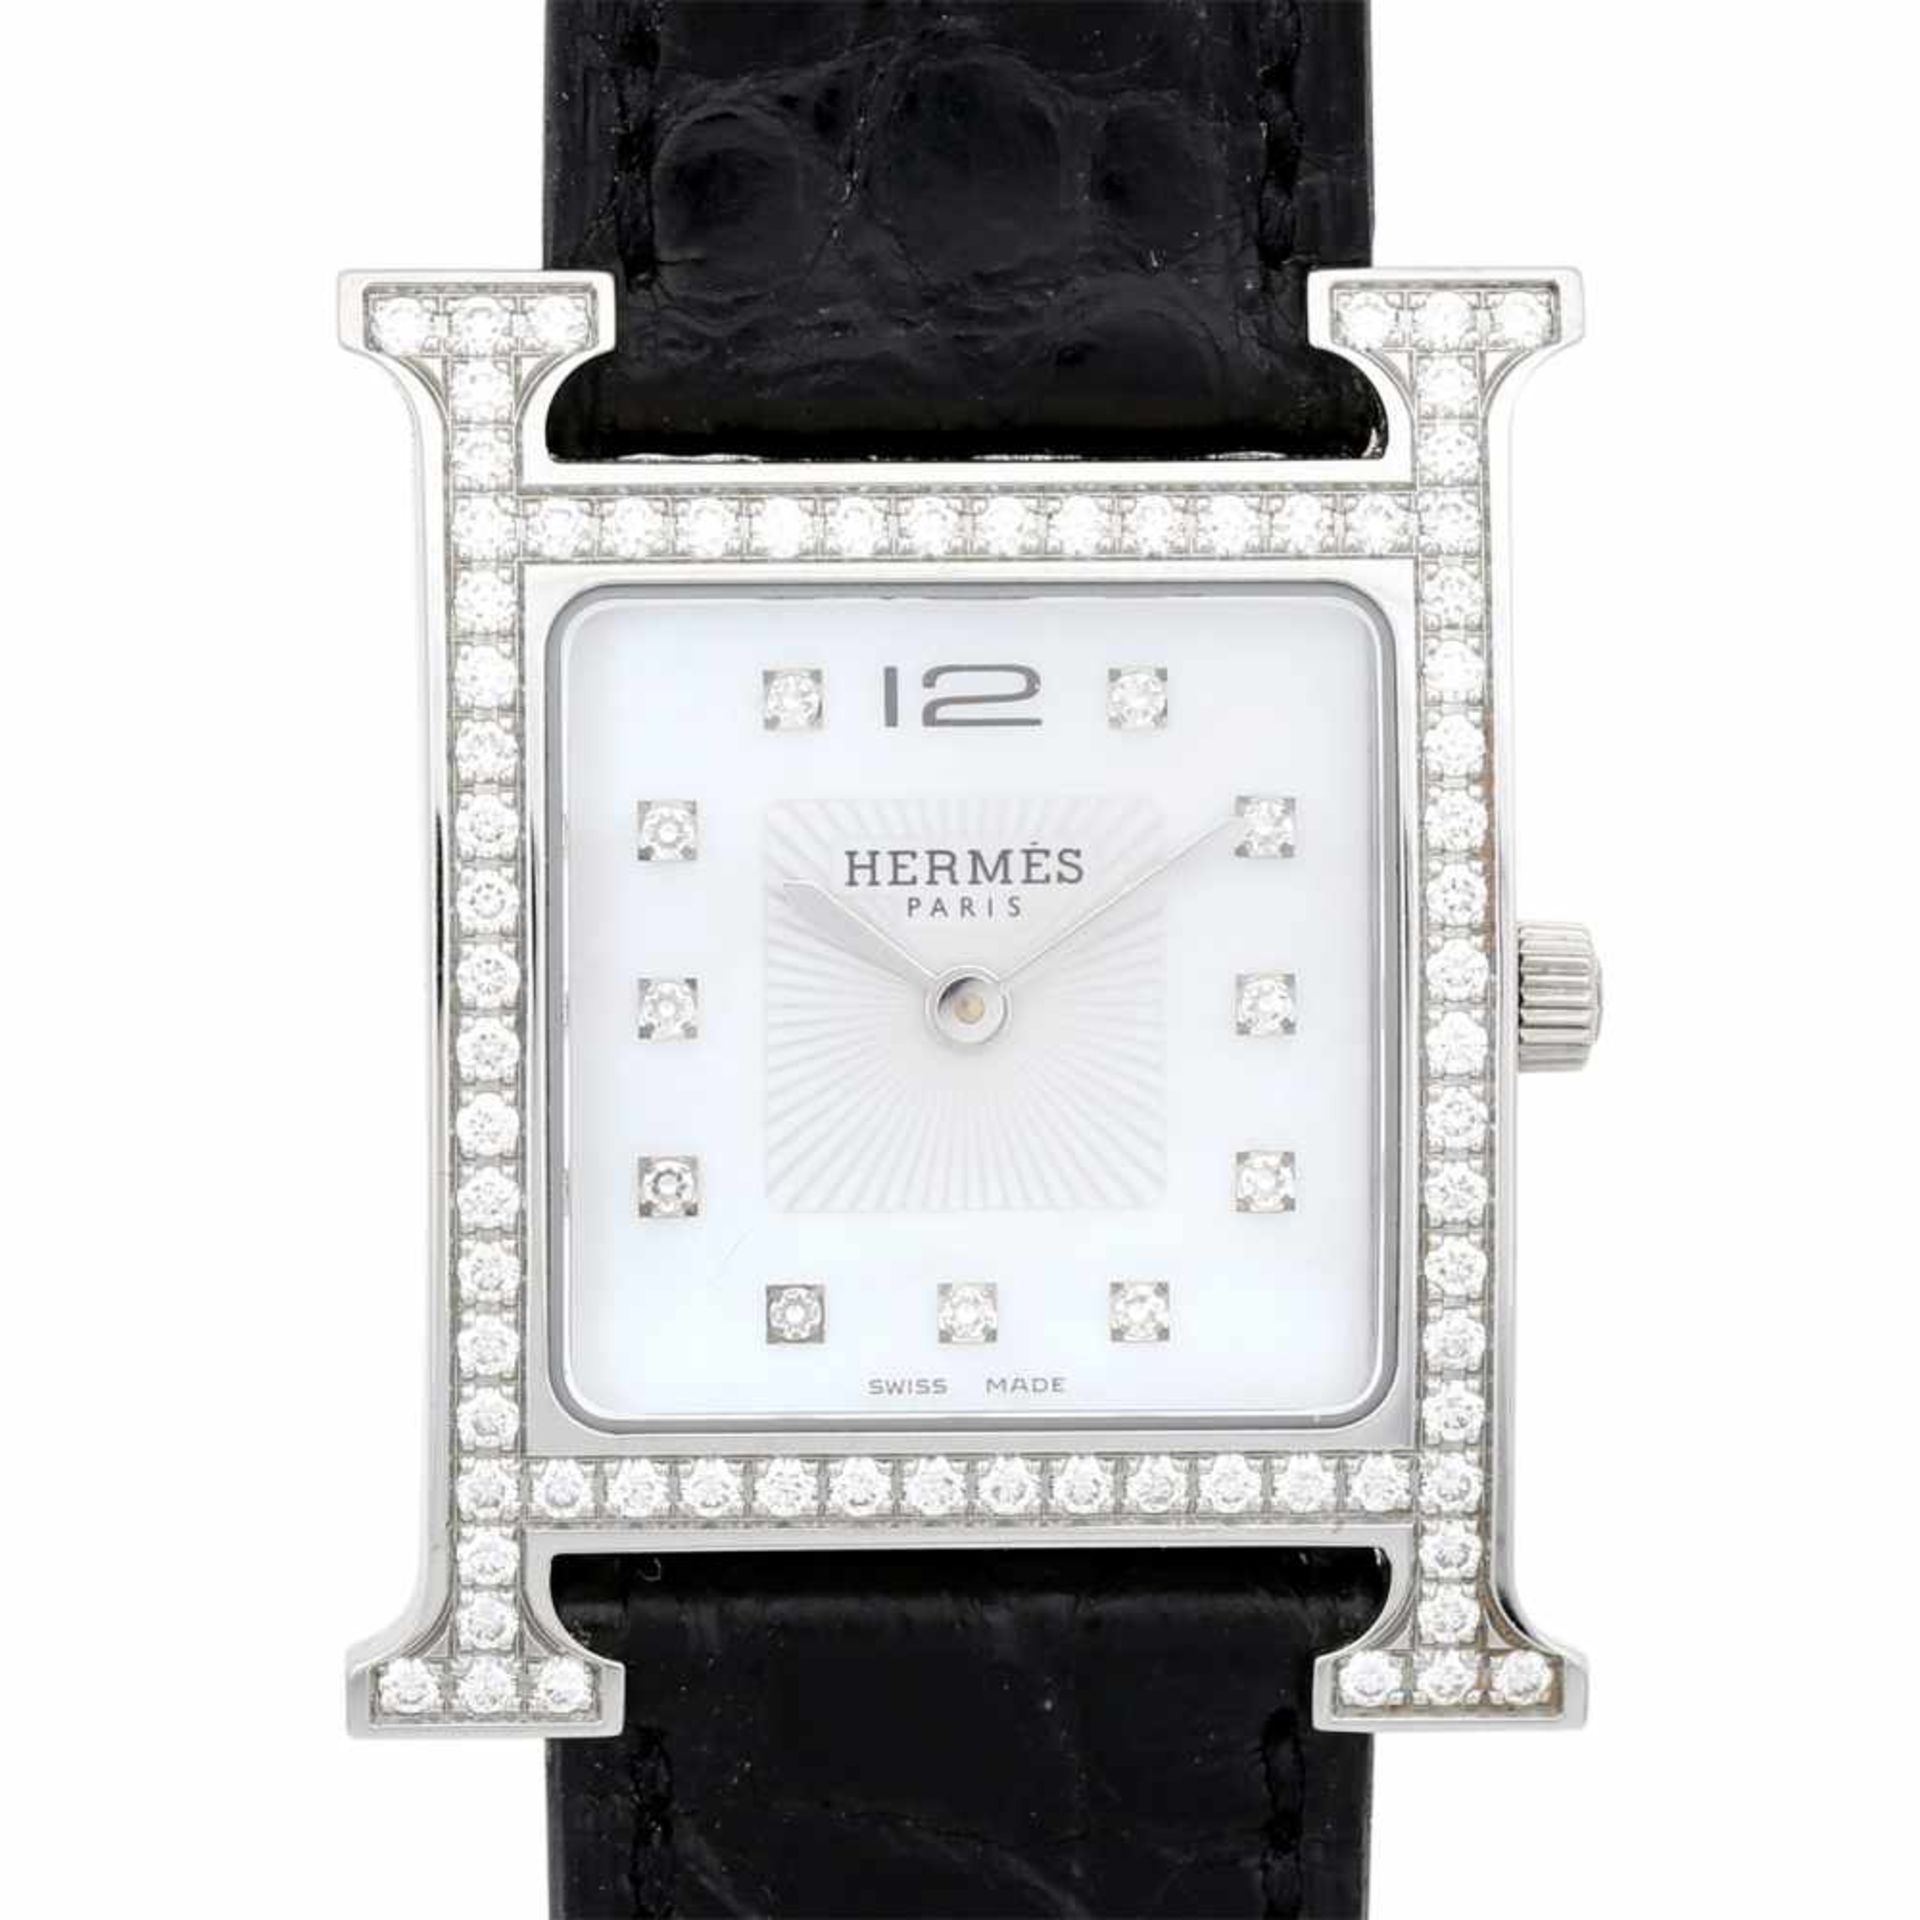 HERMÈS exquisite Damen Armbanduhr "HEURE H", Koll. 2011. H-Gehäuse (26x26mm) aus poliertem Edelstahl